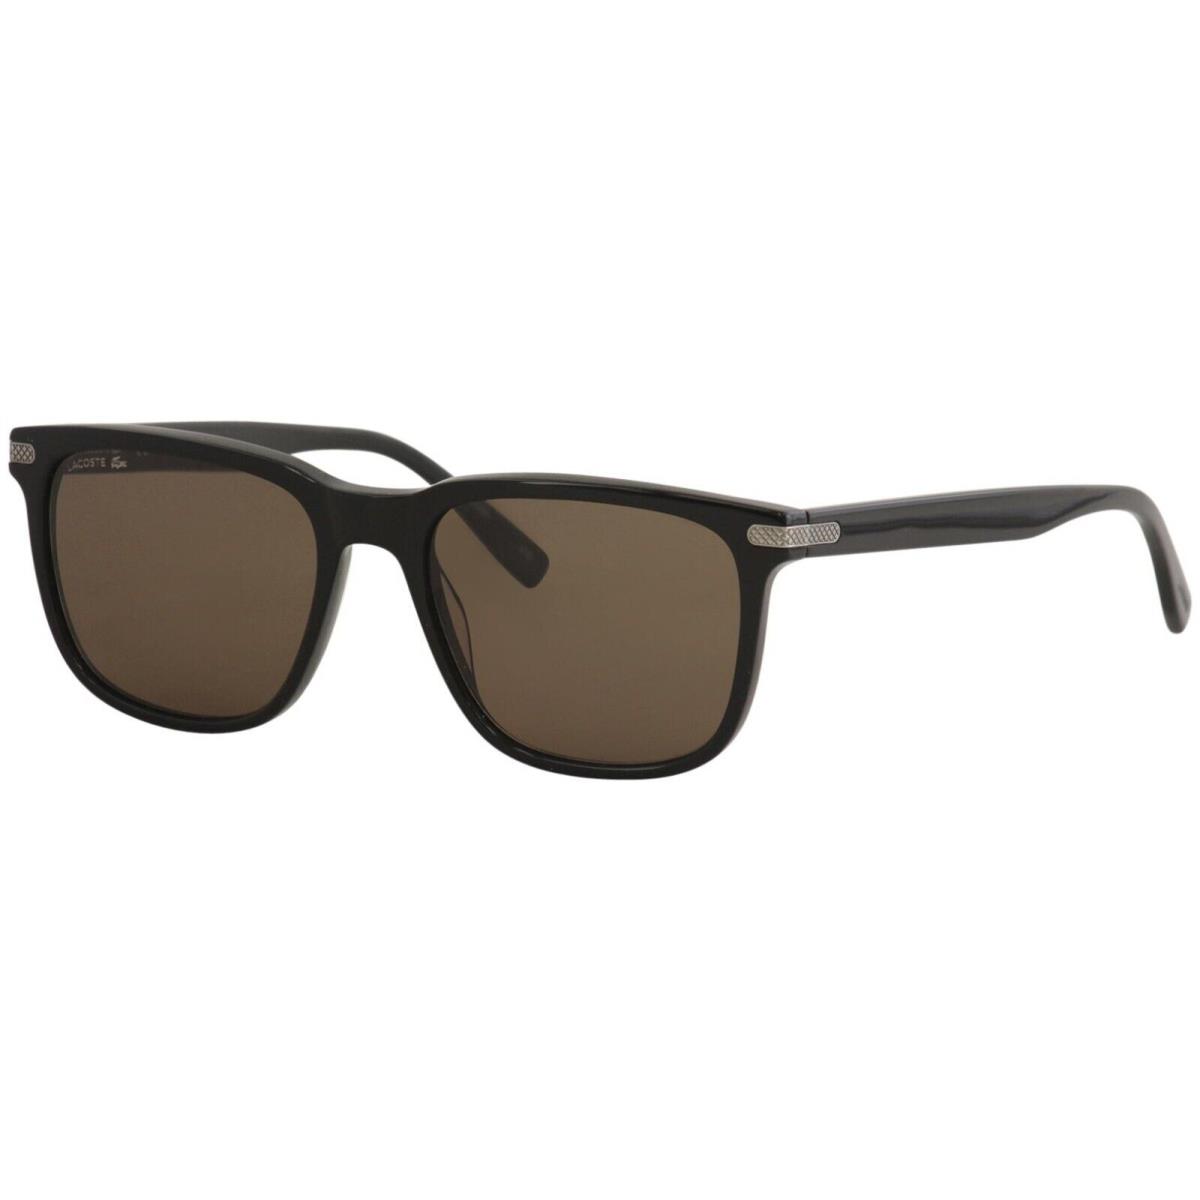 Lacoste Sunglasses L898S Black 56-18-150 w/ Case Retail